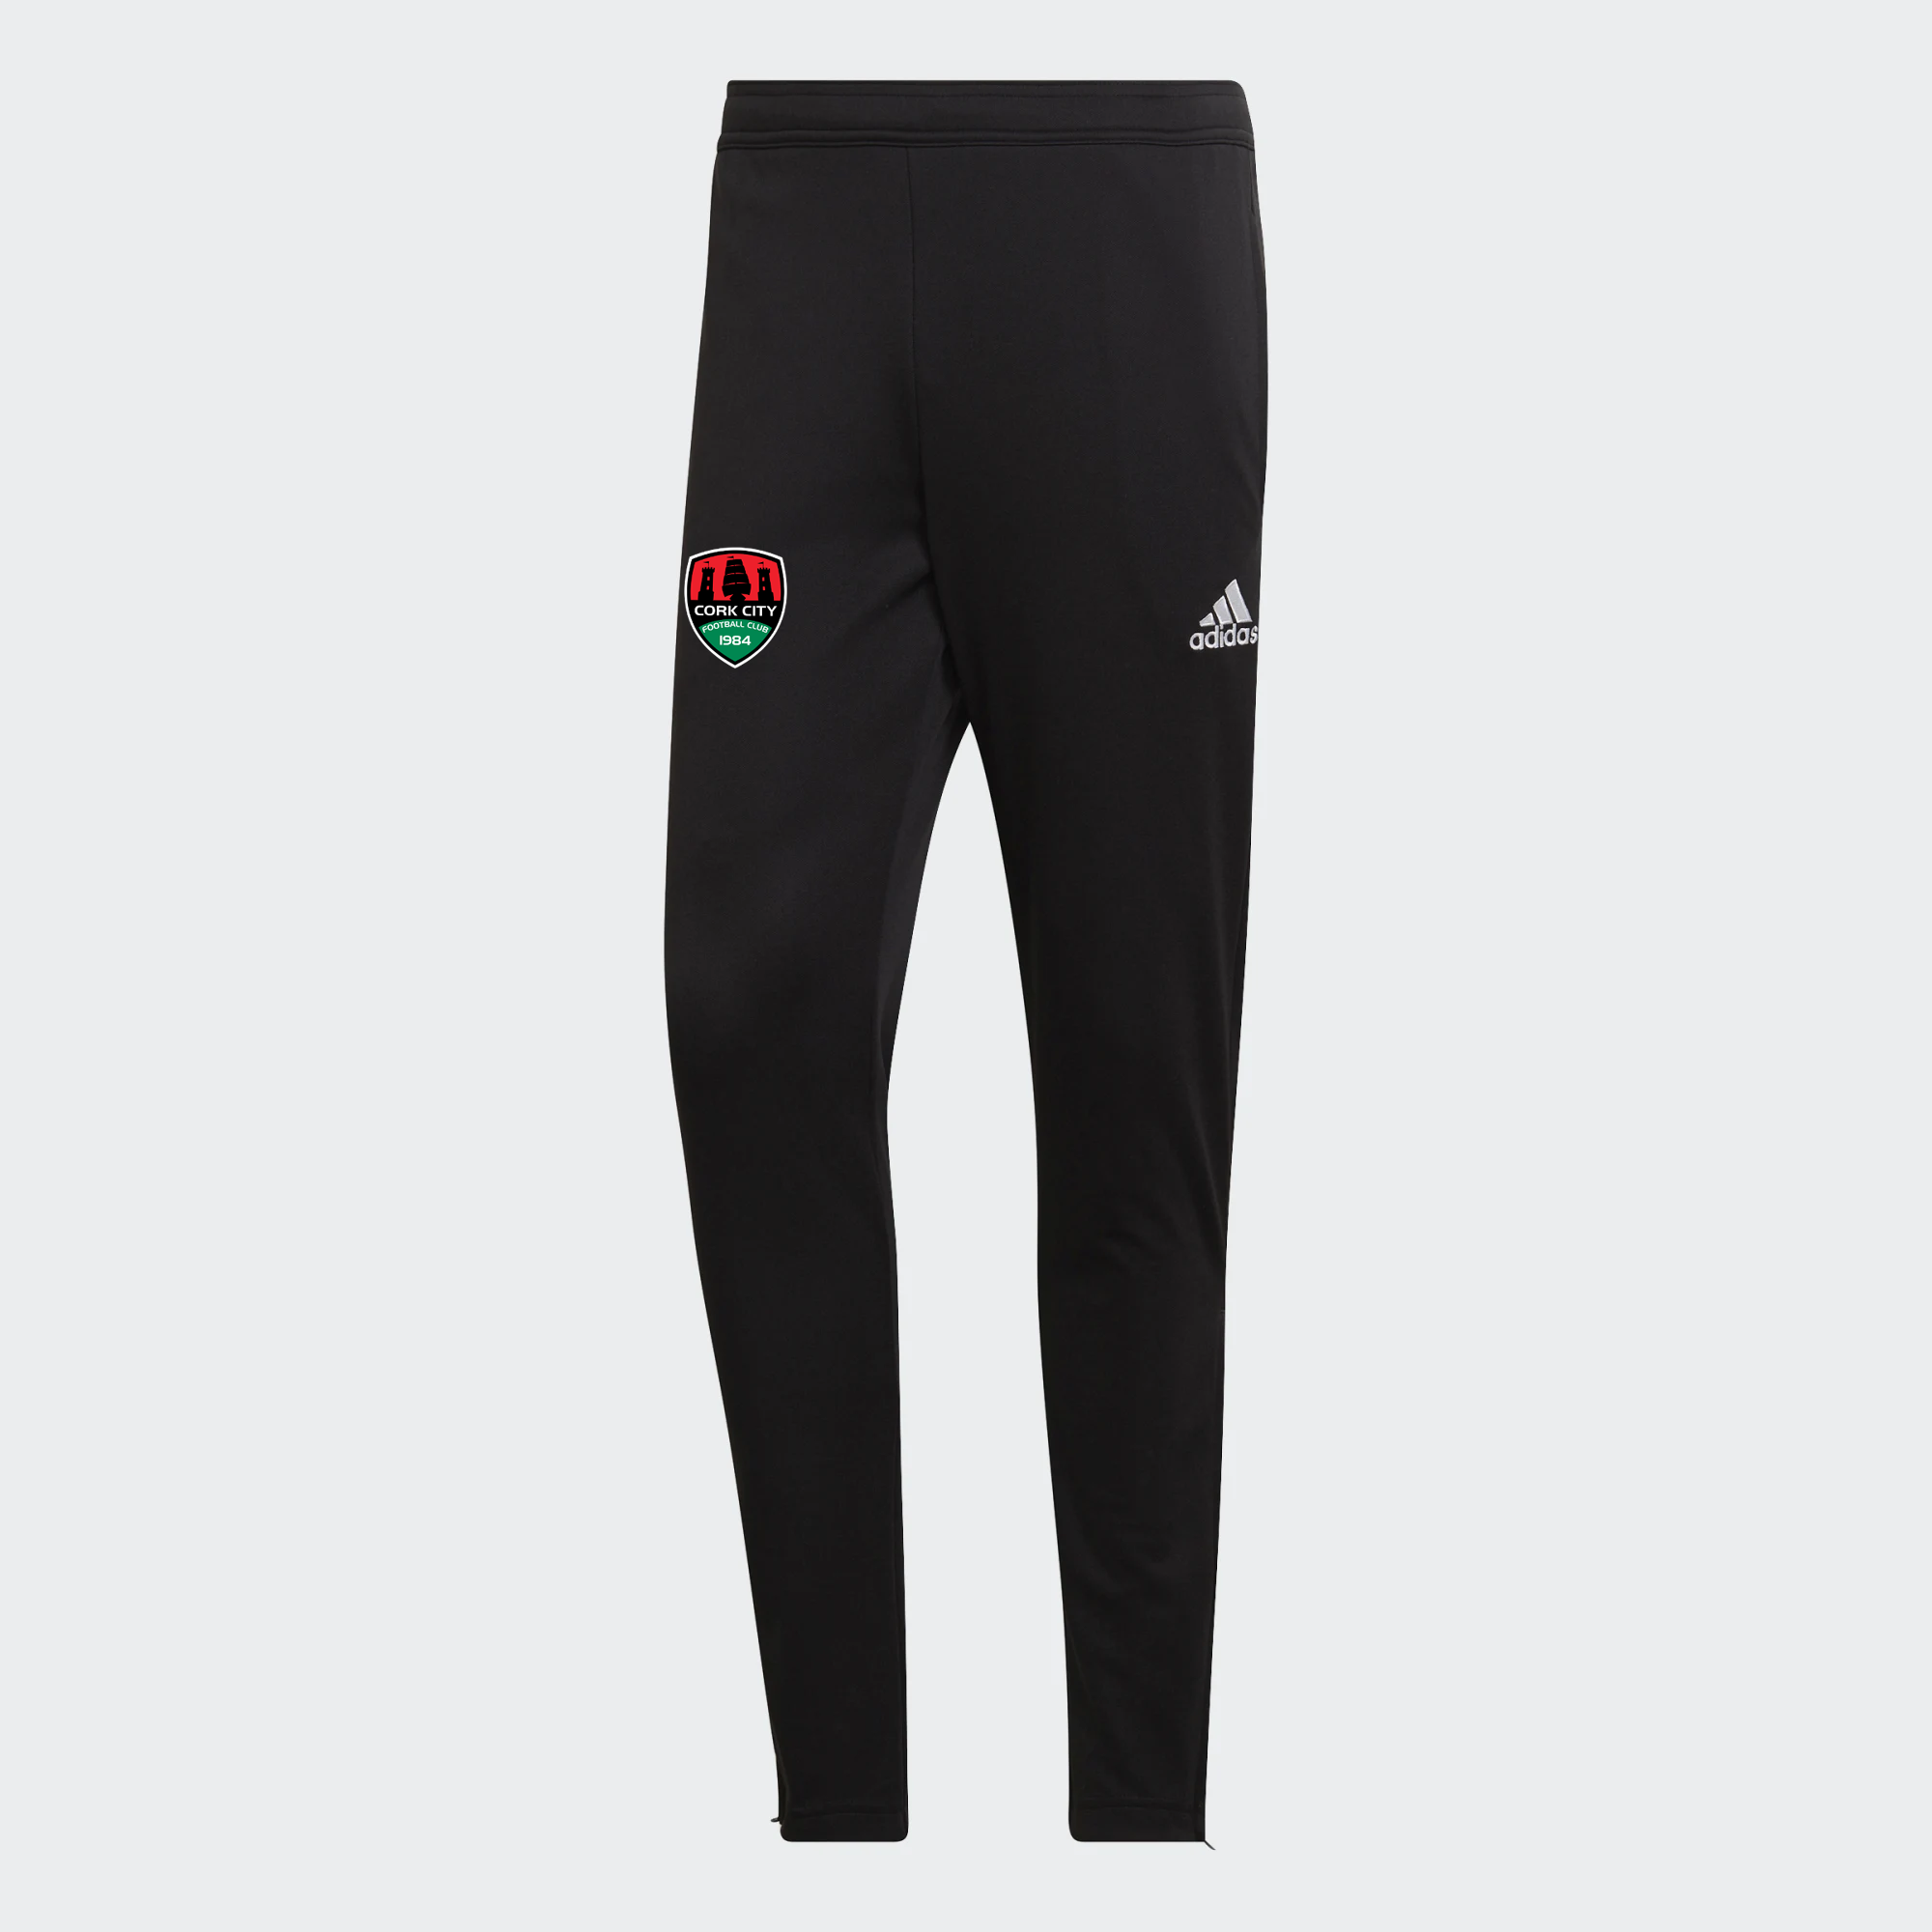 Adidas Ent22 Black Training Pants - Kids / Youth